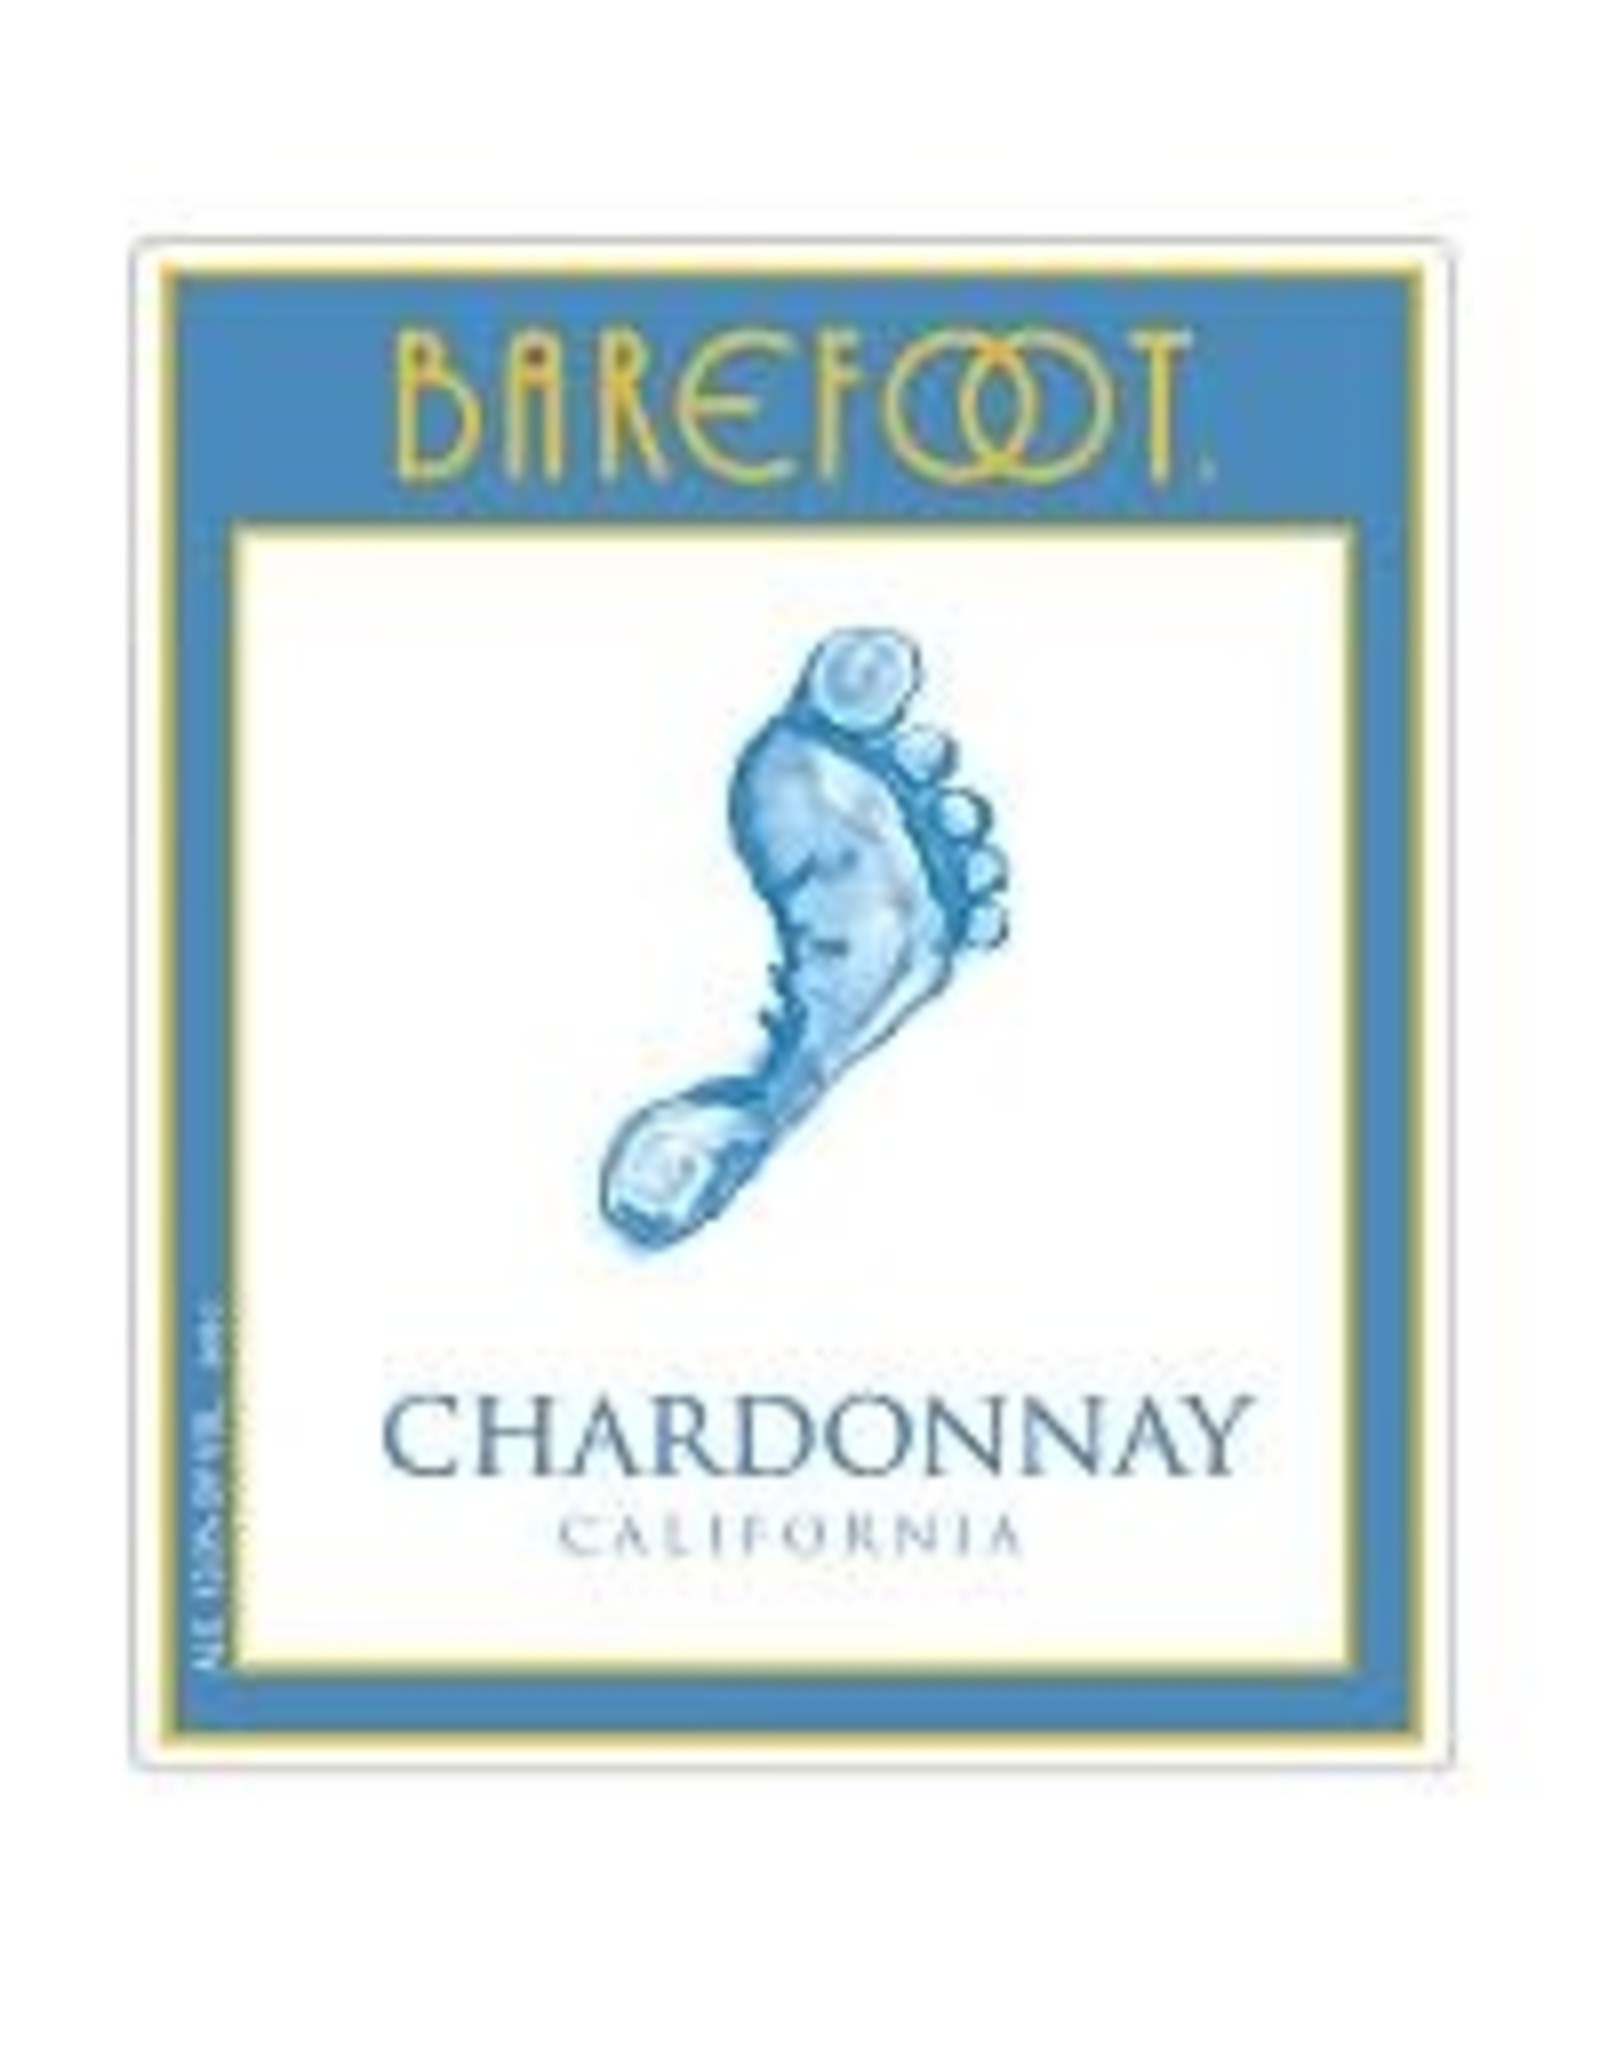 BAREFOOT CHARDONNAY 1.5L